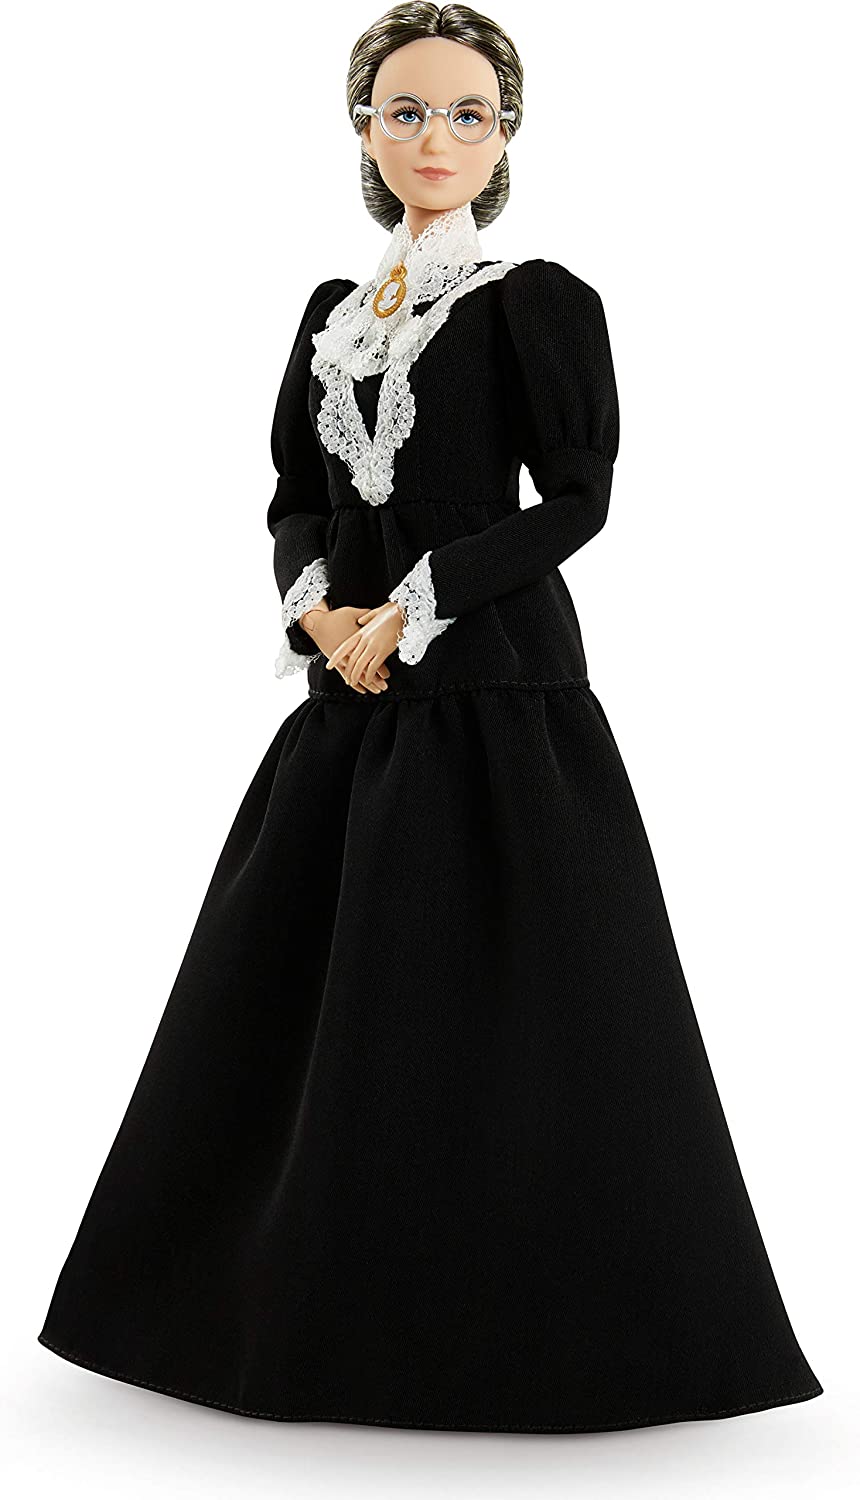 Barbie Susan B. Anthony doll